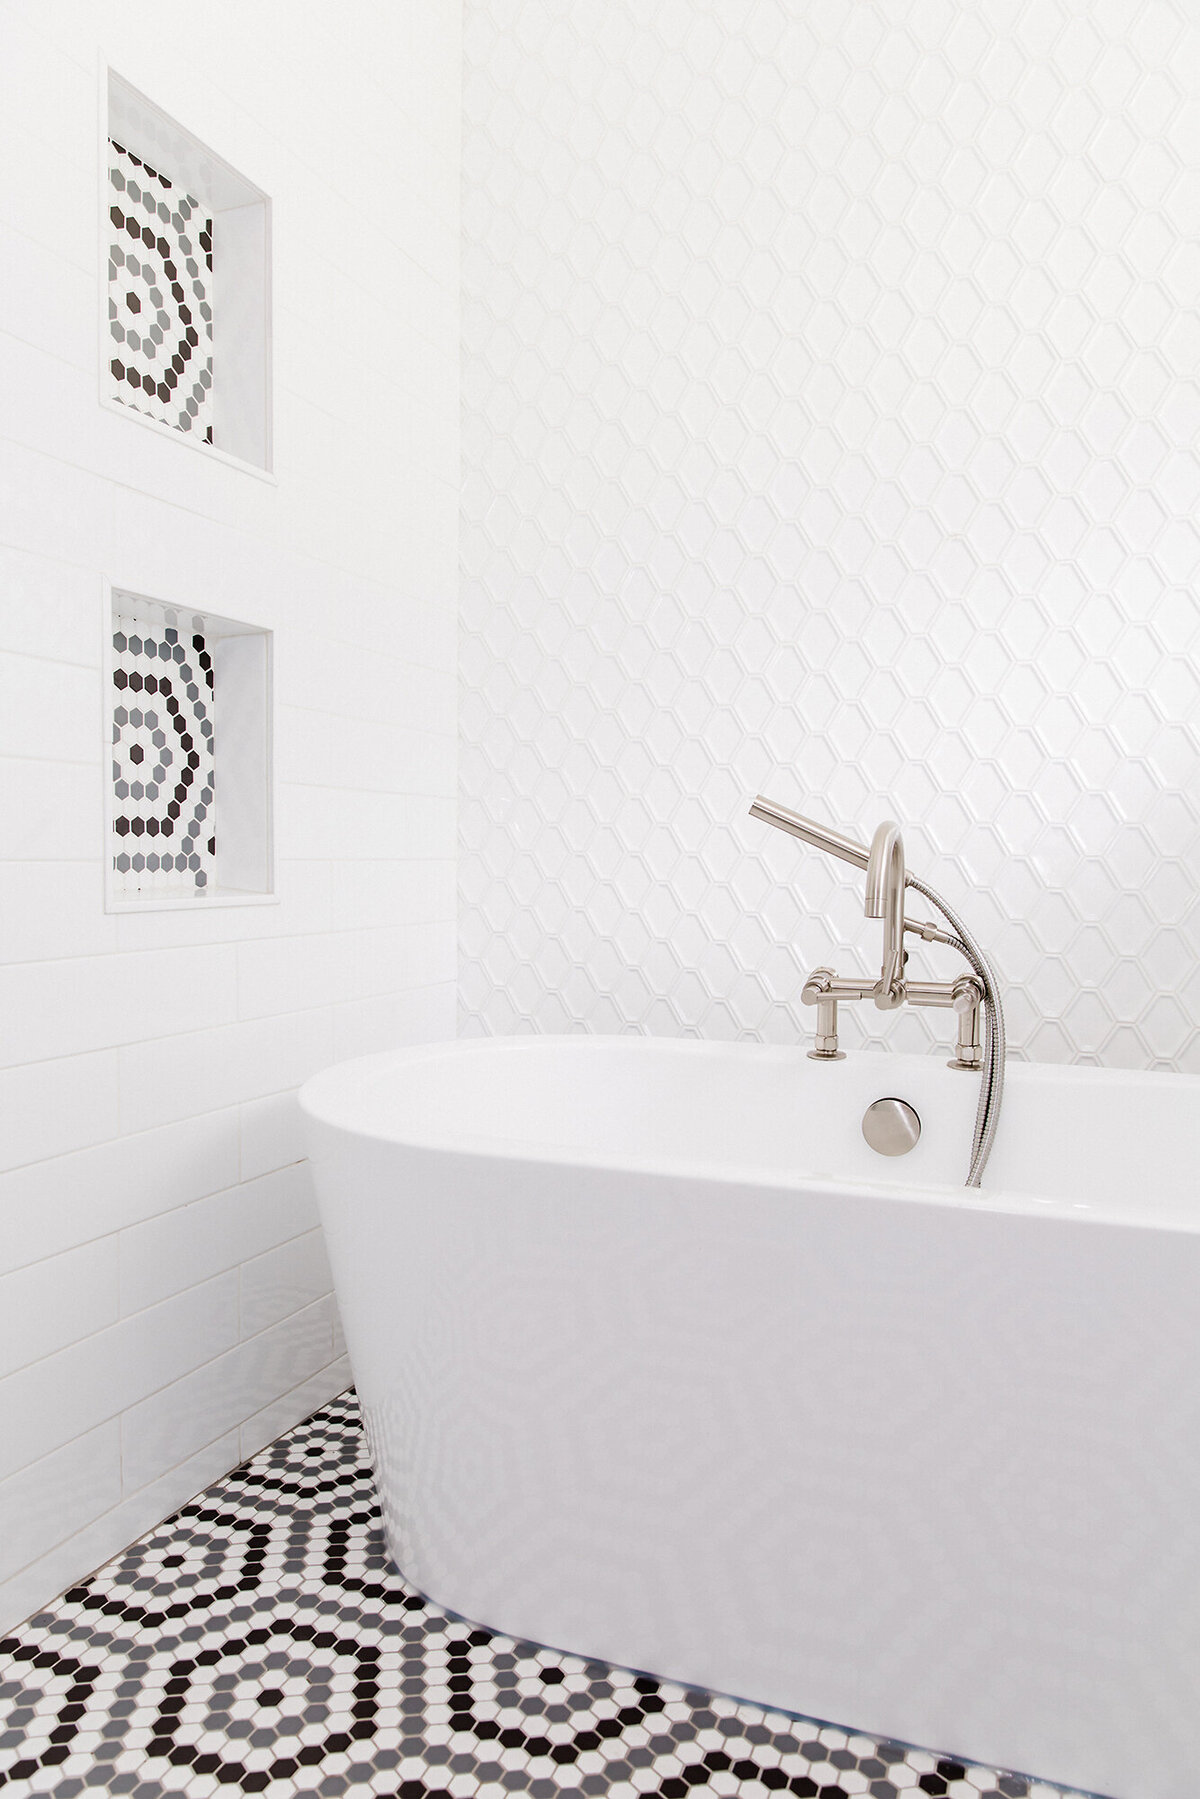 Fresh, modern bathroom remodel with freestanding tub and hex tile floor - desi